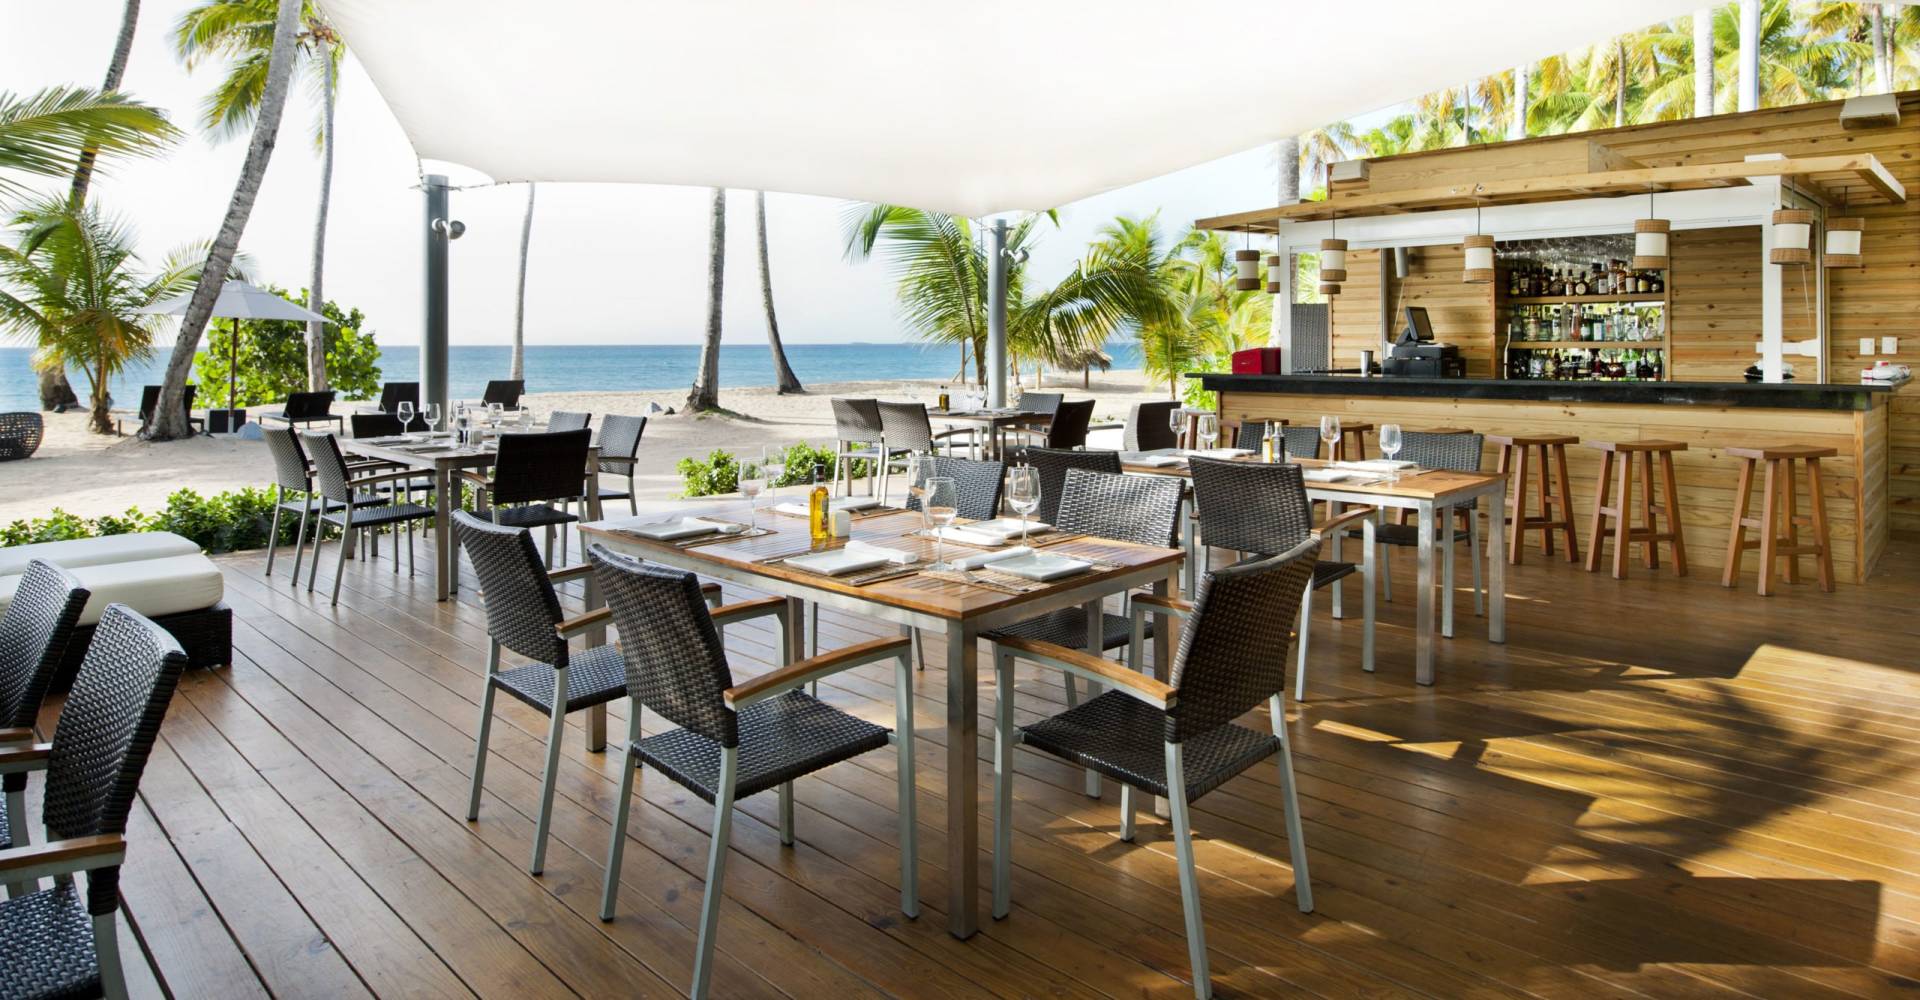 Dominikanische Republik, Sublime Samana, Restaurant am Strand, Latin America Tours